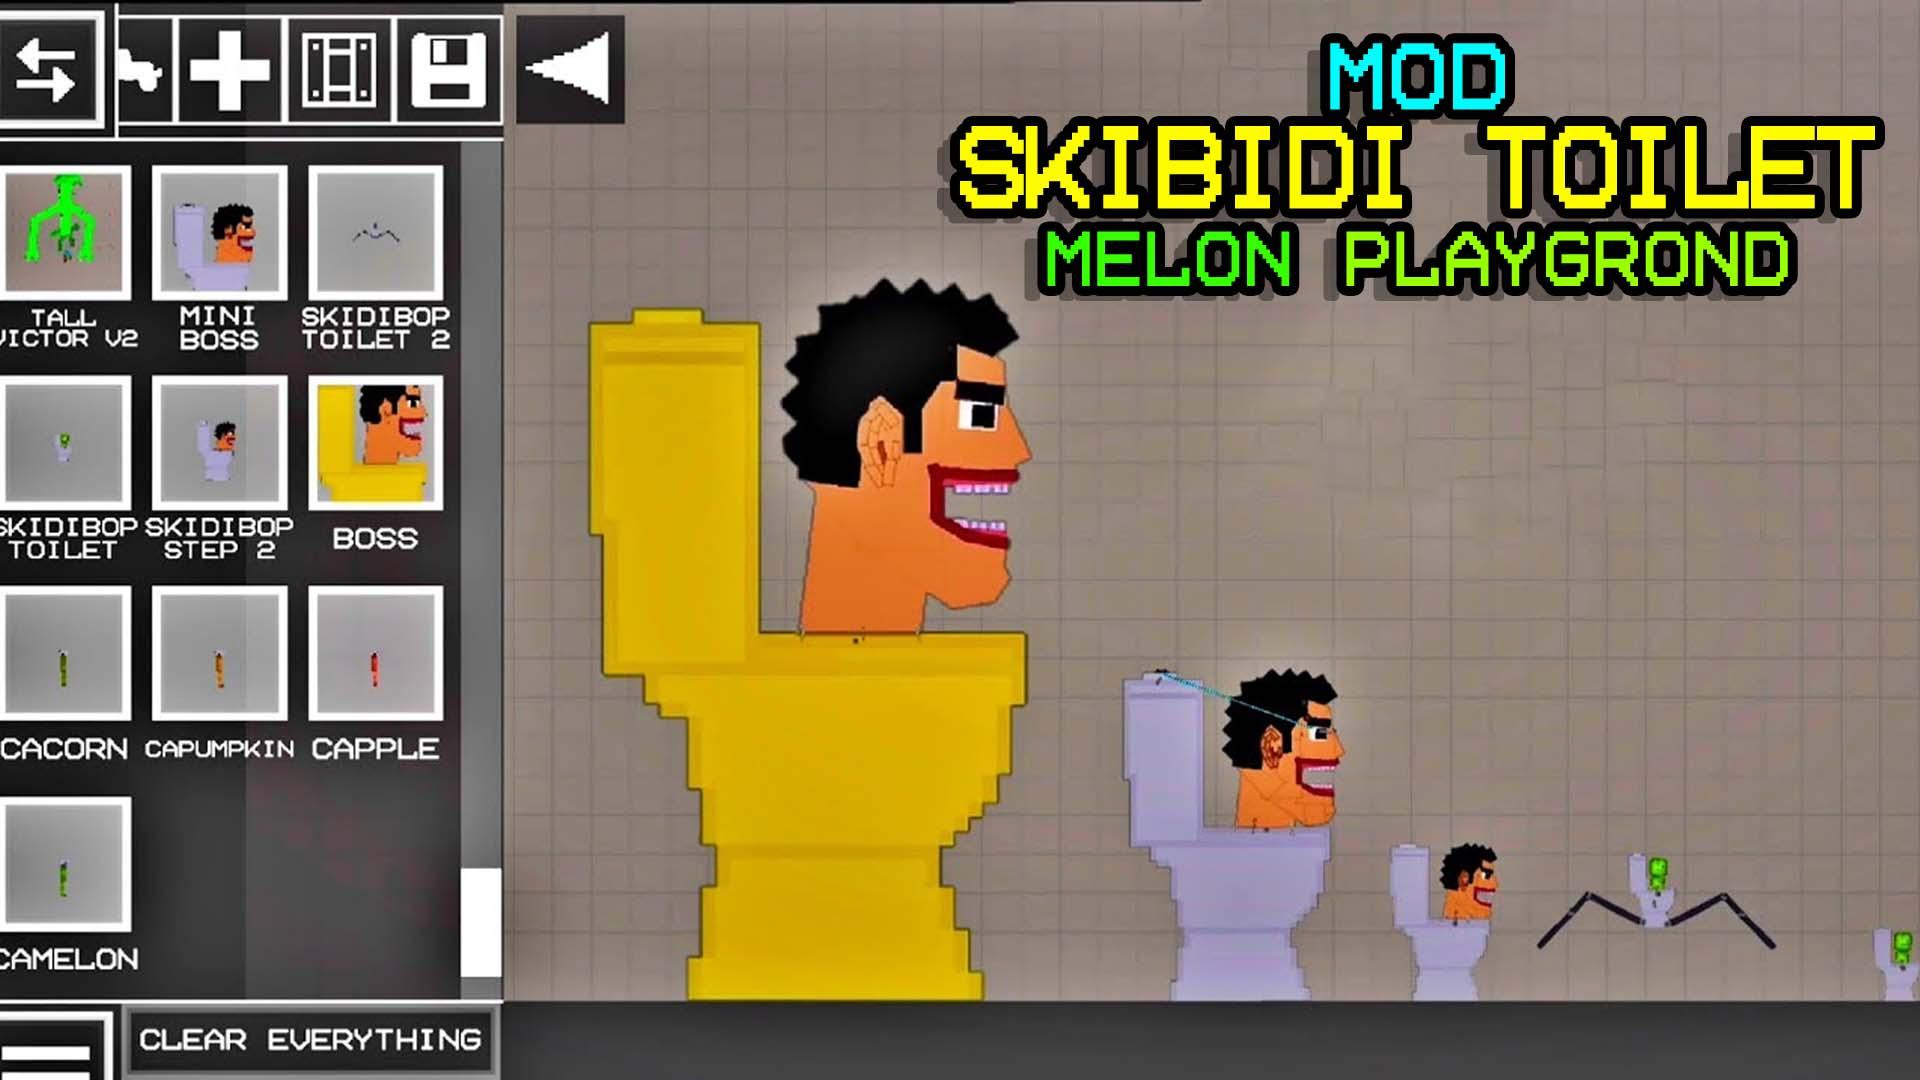 Skibidi toilet пак. Mod Melon Playground SKIBIDI Toilet. Мелон санбокс фото игры. Игрушка Мелон мод. Скибиди туалет в Мелон плейграунд.